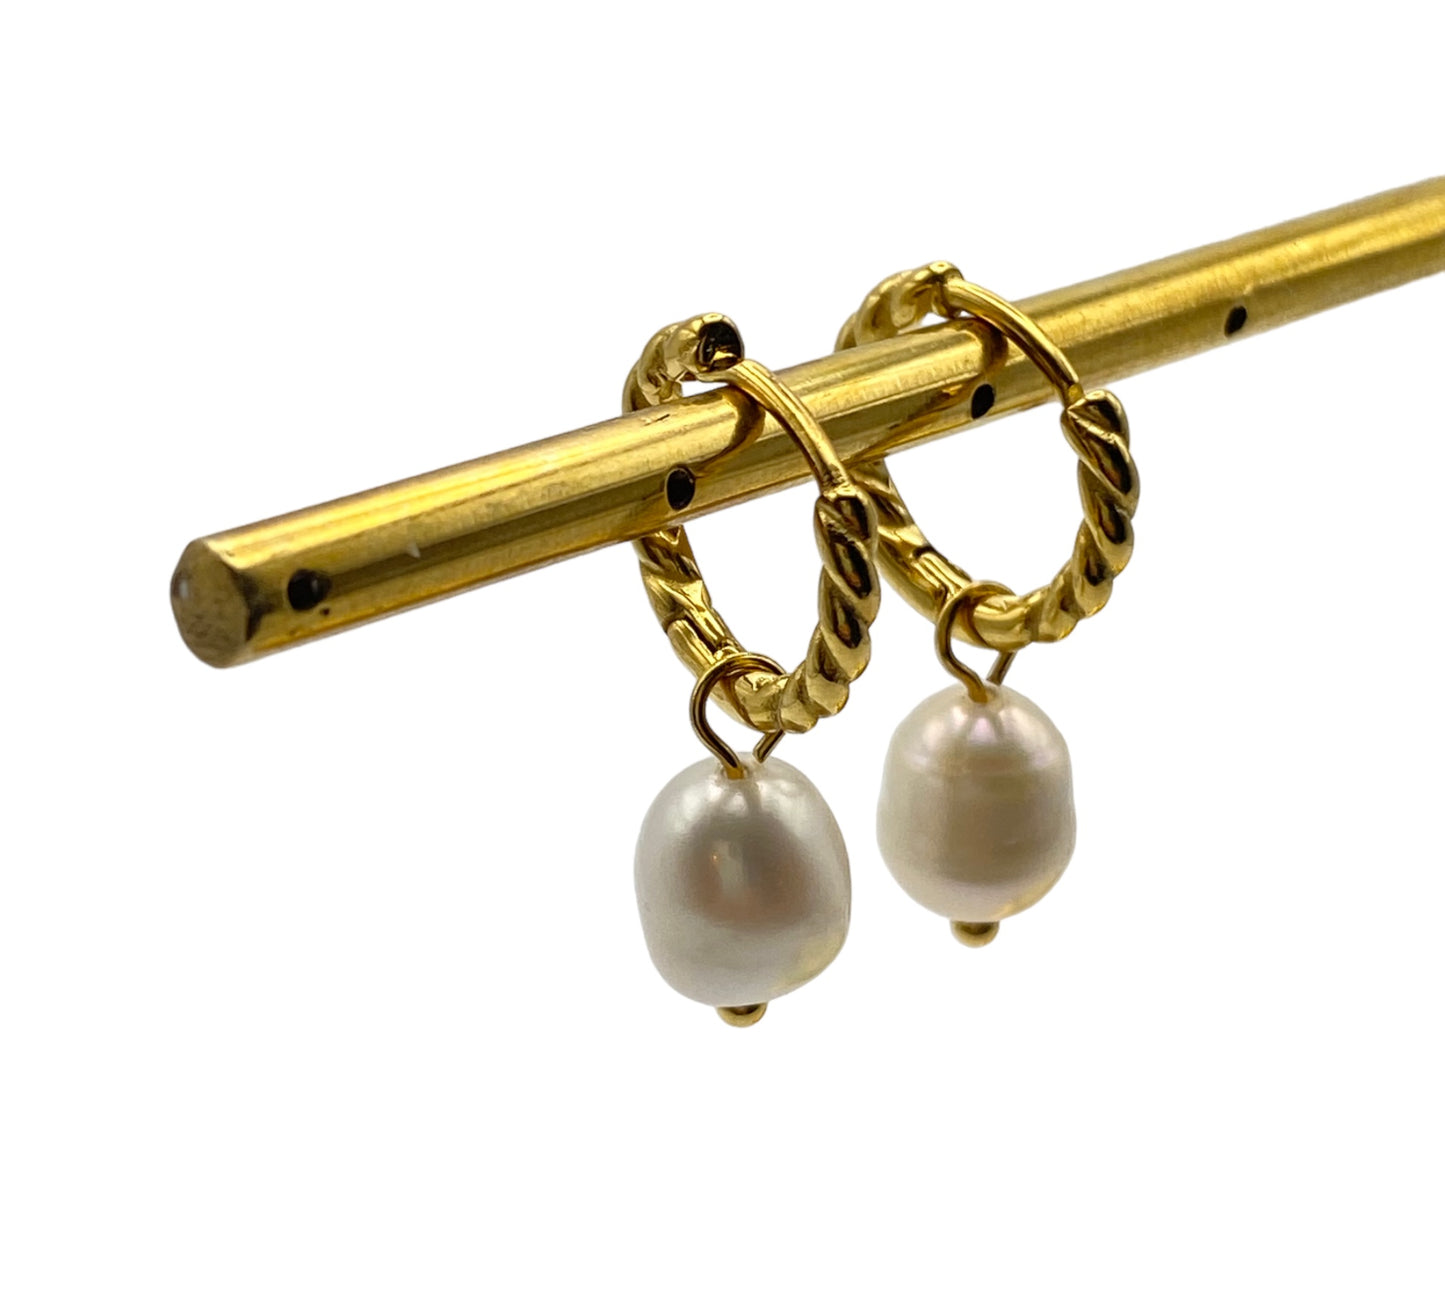 "SPLASH" gold plated hoop earrings with freshwater pearl